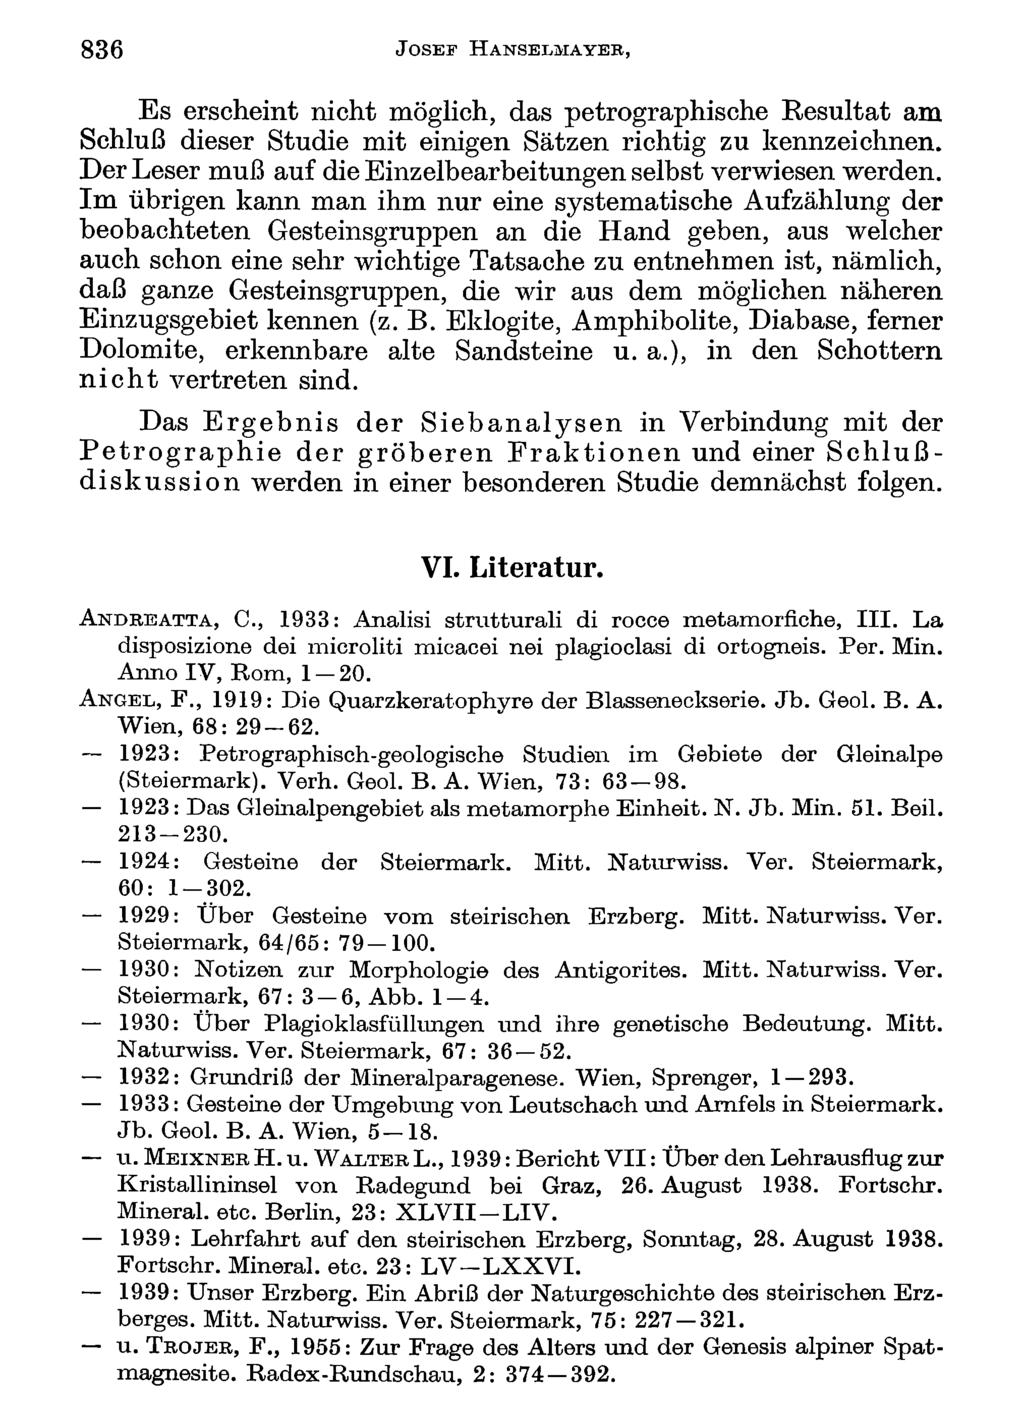 836 J o s e f H a n s e l m a y e b, Akademie d. Wissenschaften Wien; download unter www.biologiezentrum.